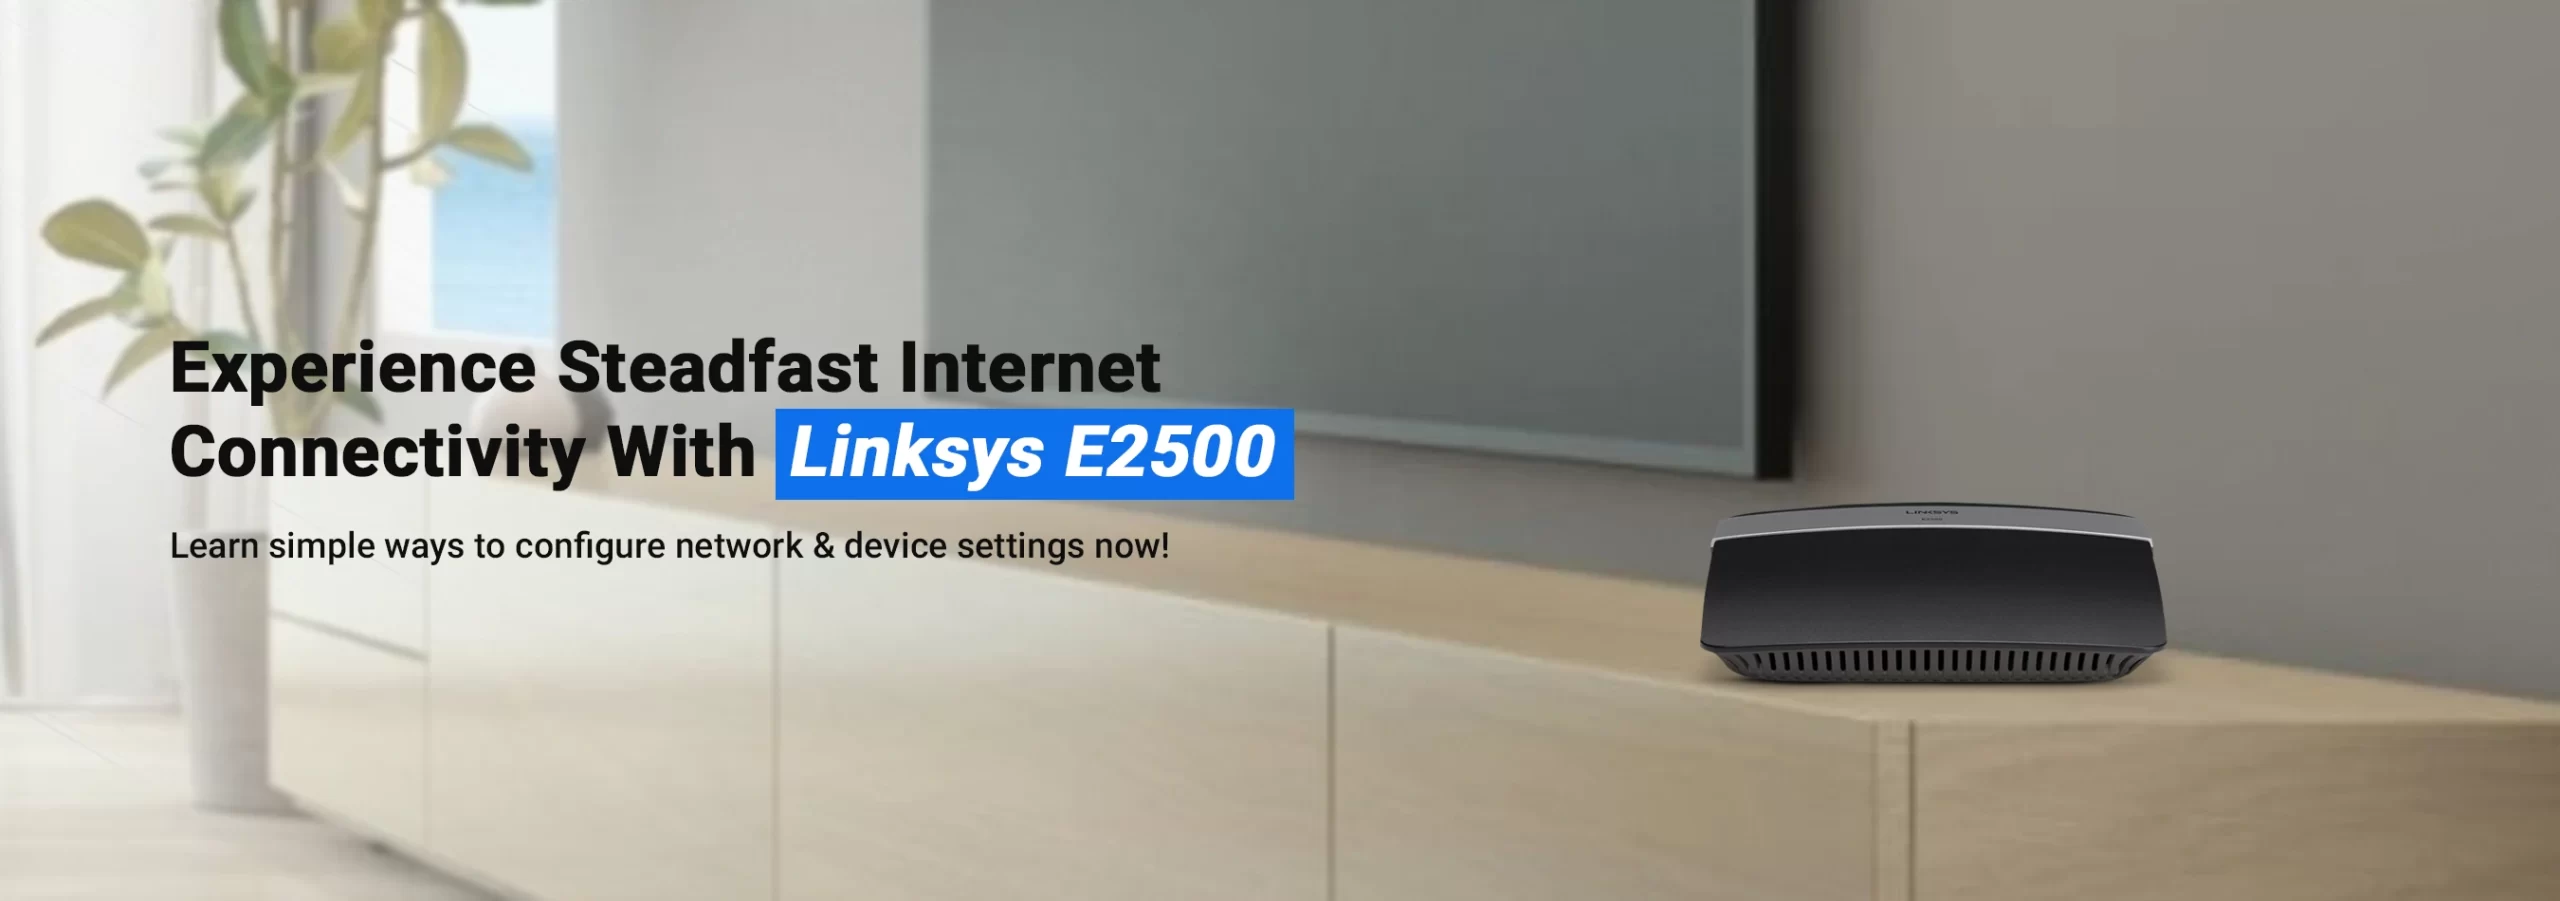  How to complete the Linksys E2500 Setup process?